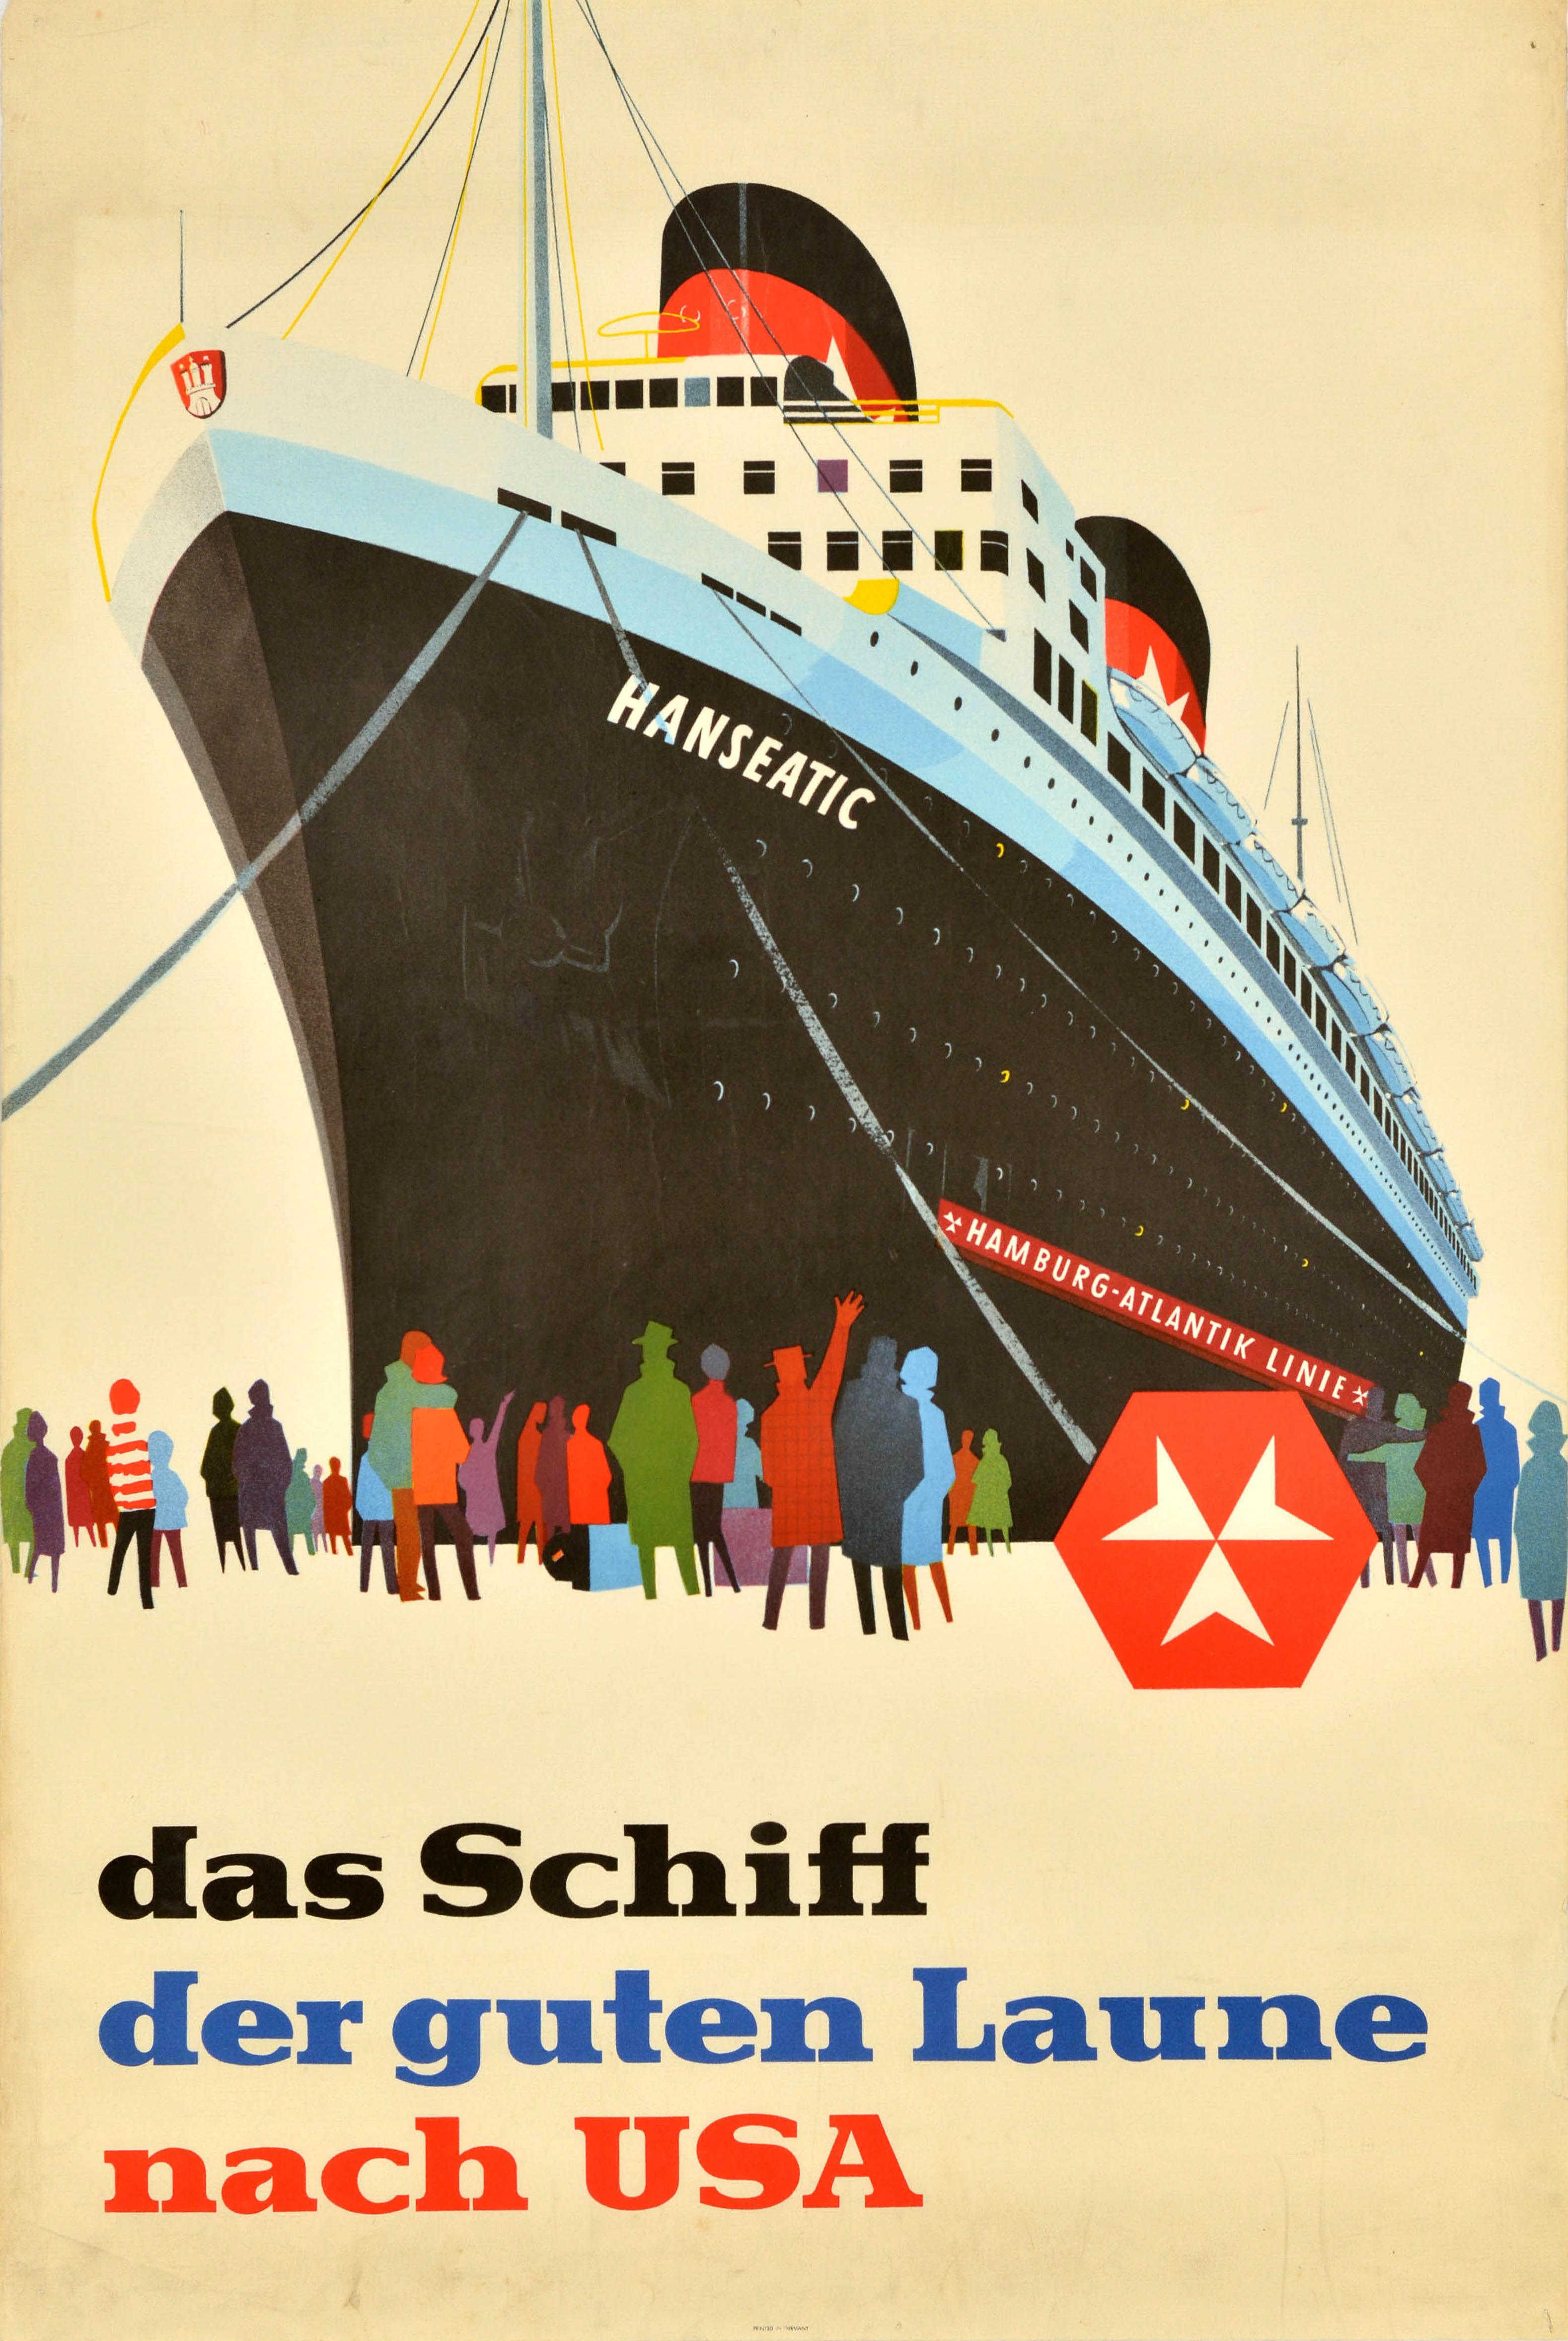 Unknown Print - Original Vintage Travel Poster Hamburg Atlantic Line Hanseatic USA Cruise Ship